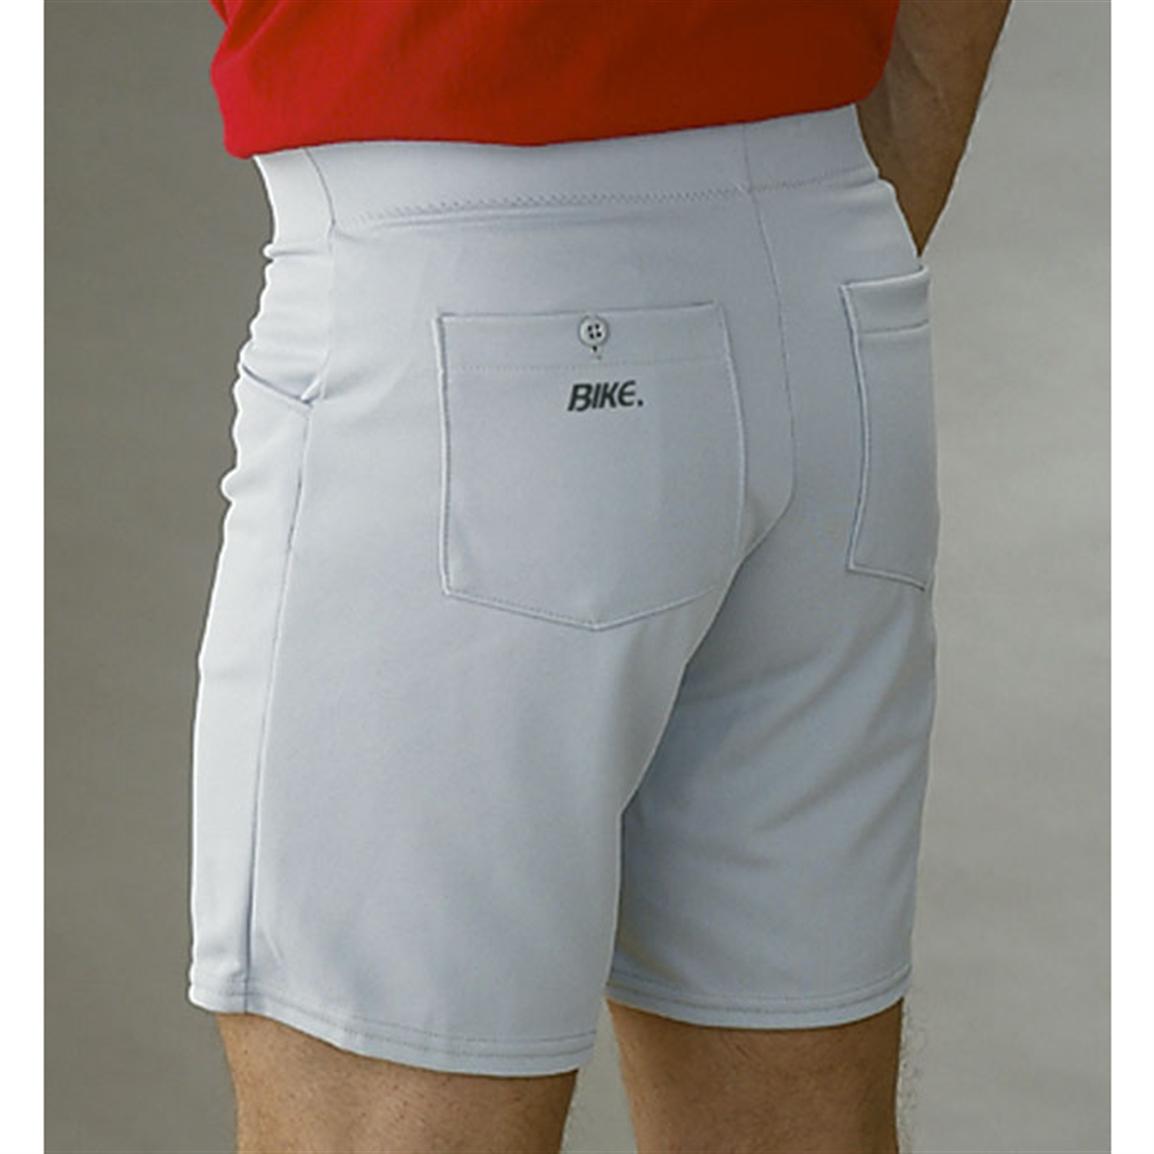 bike brand shorts men